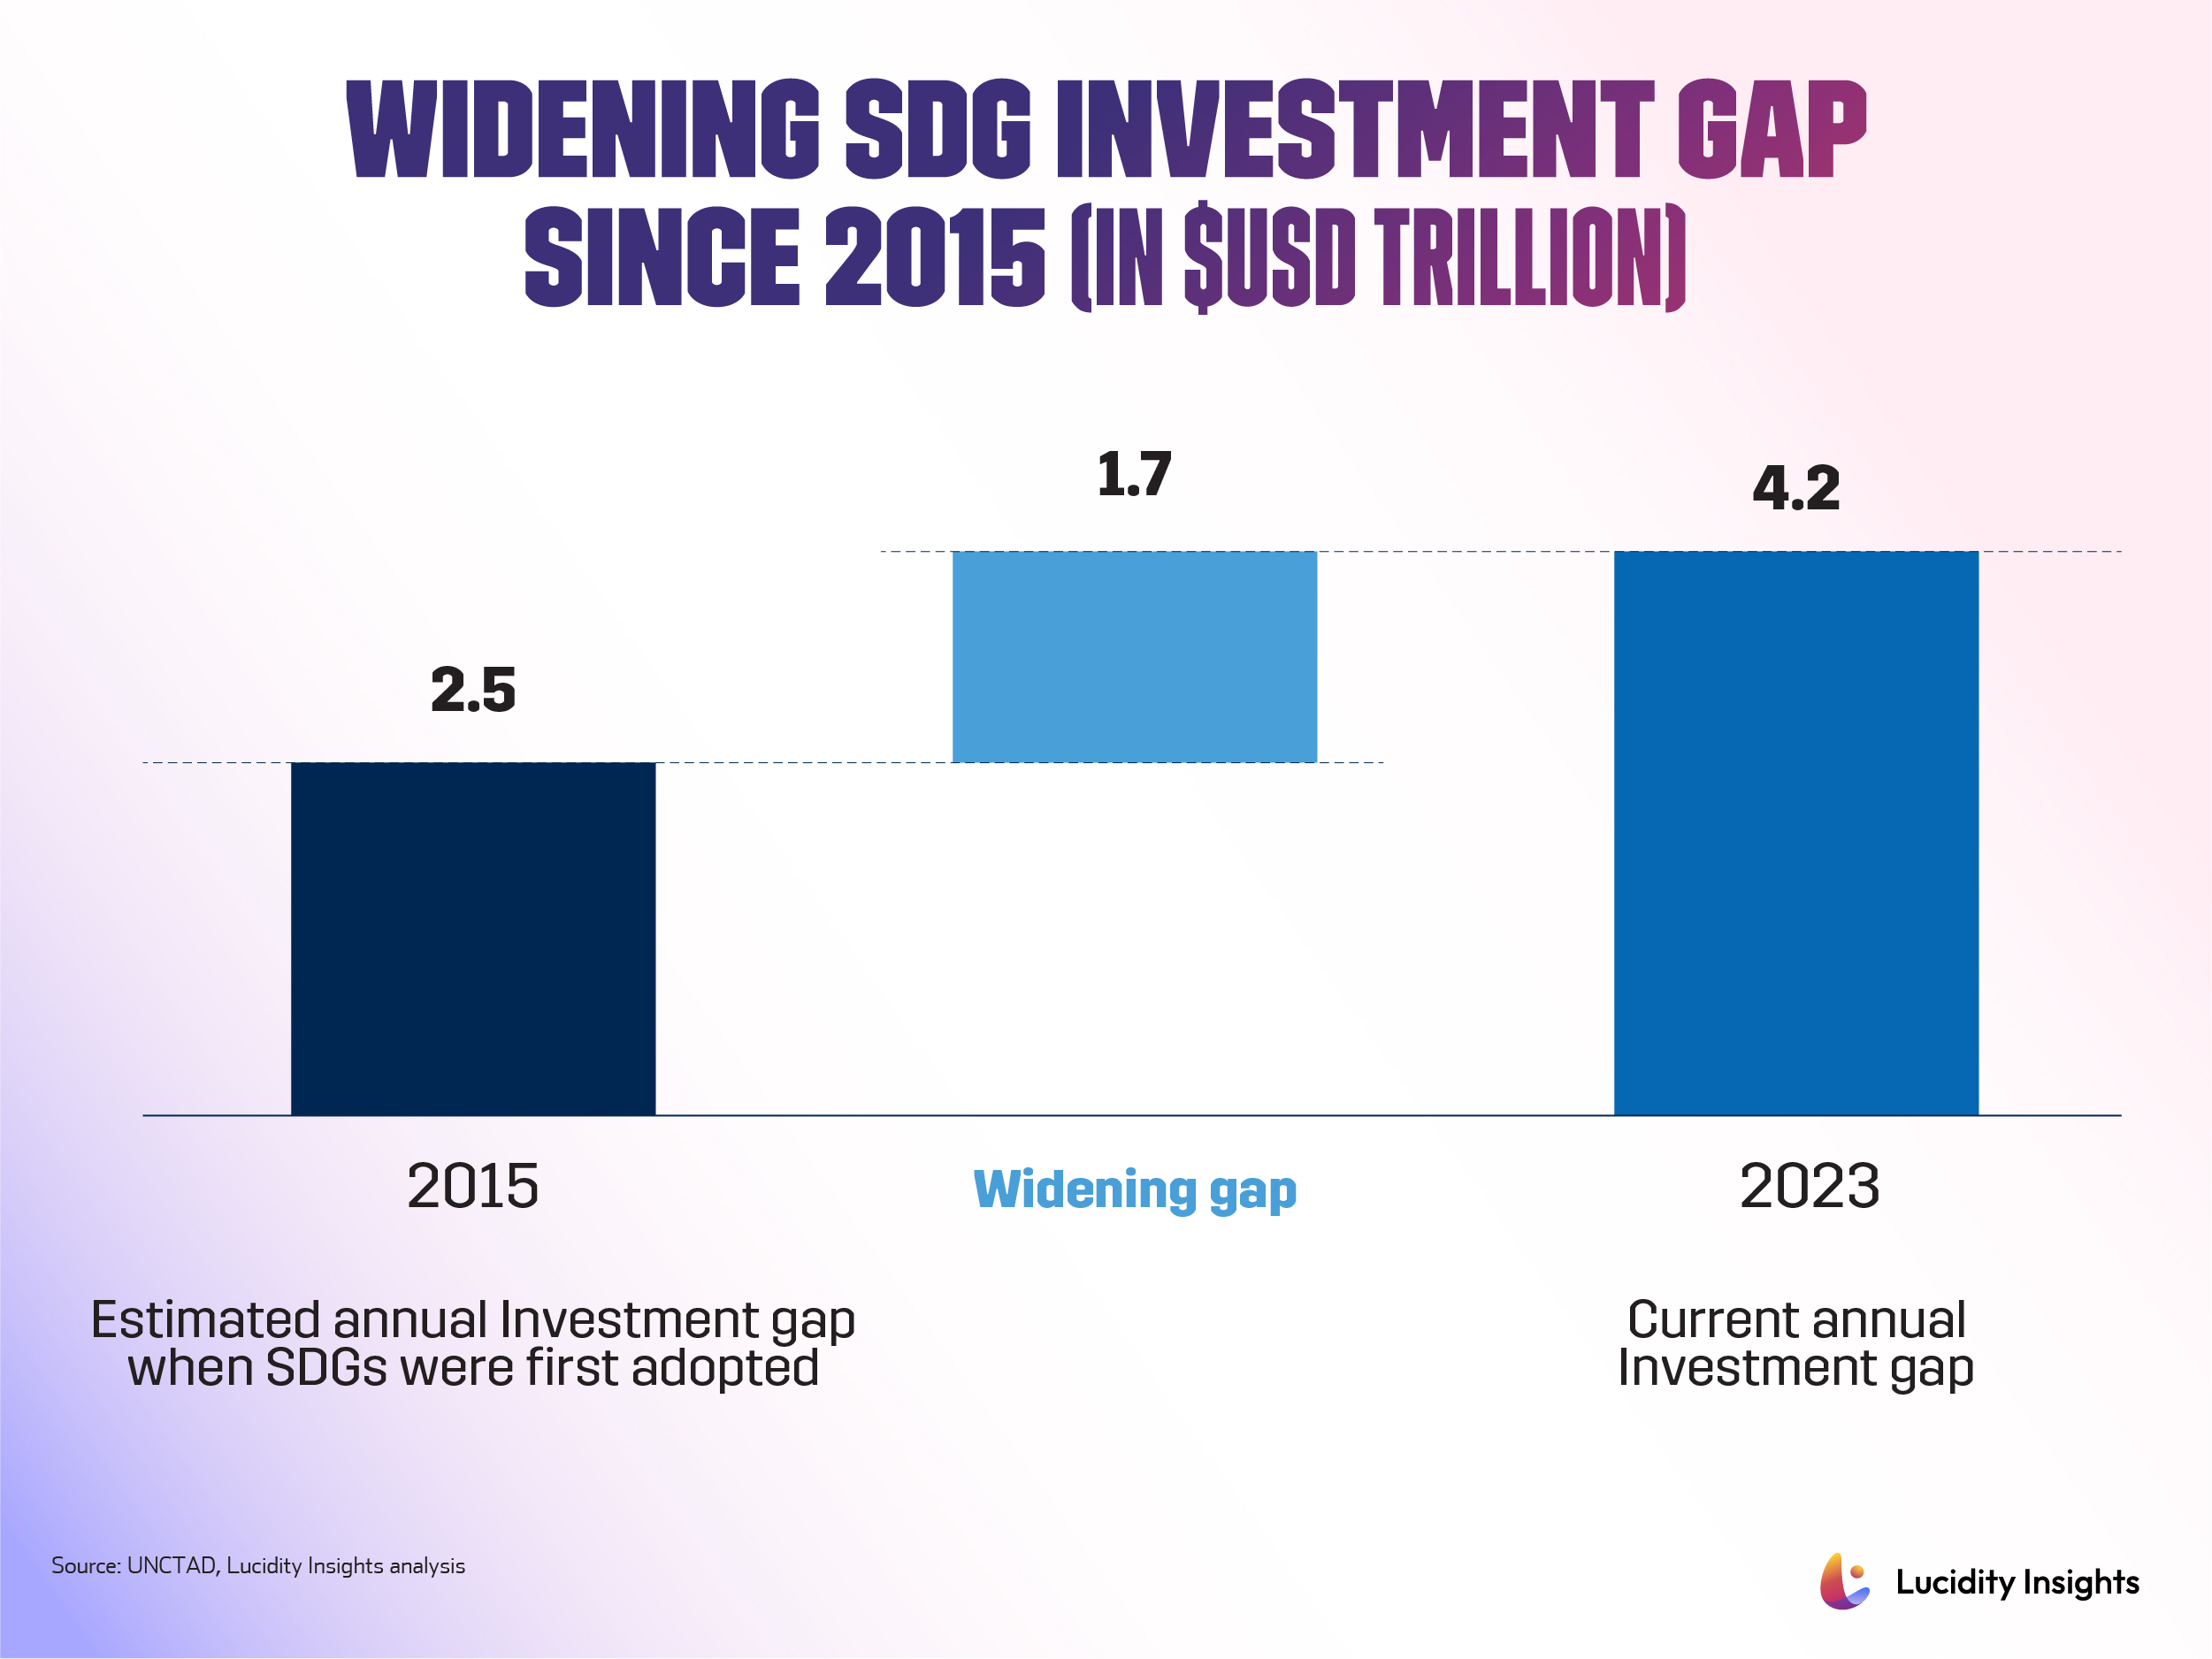 Widening SDG Investment Gap since 2015